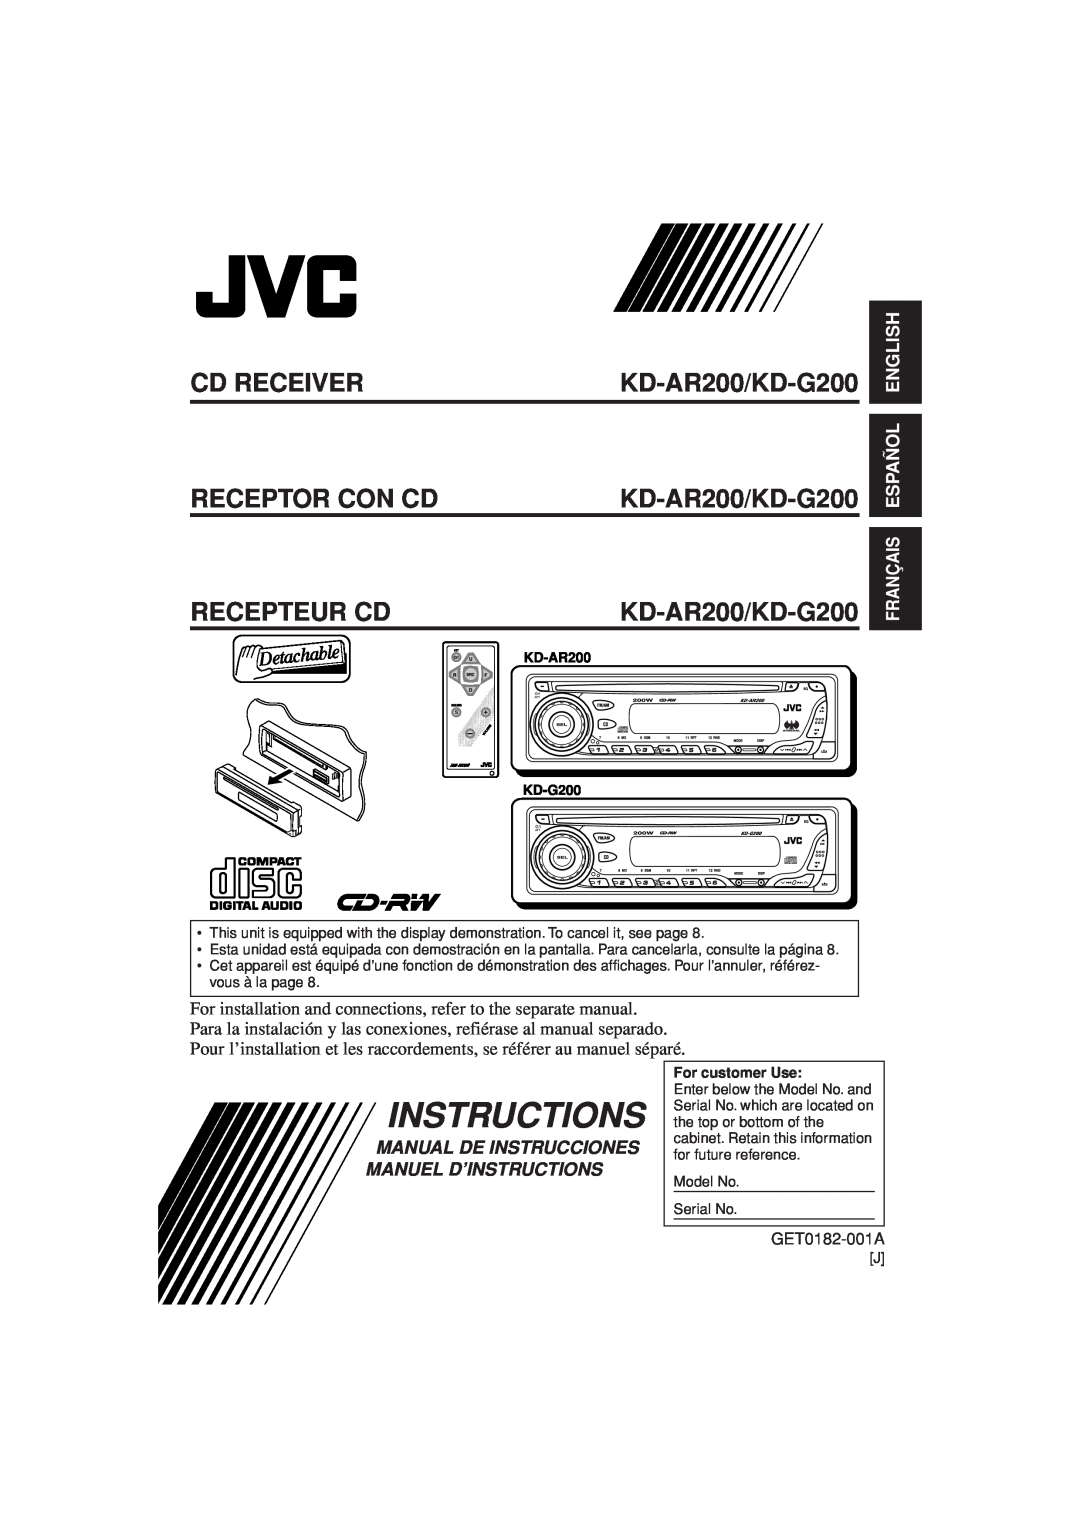 JVC manual Cd Receiver Receptor Con Cd Recepteur Cd, KD-AR200/KD-G200 KD-AR200/KD-G200, English Espa Olñ, Instructions 